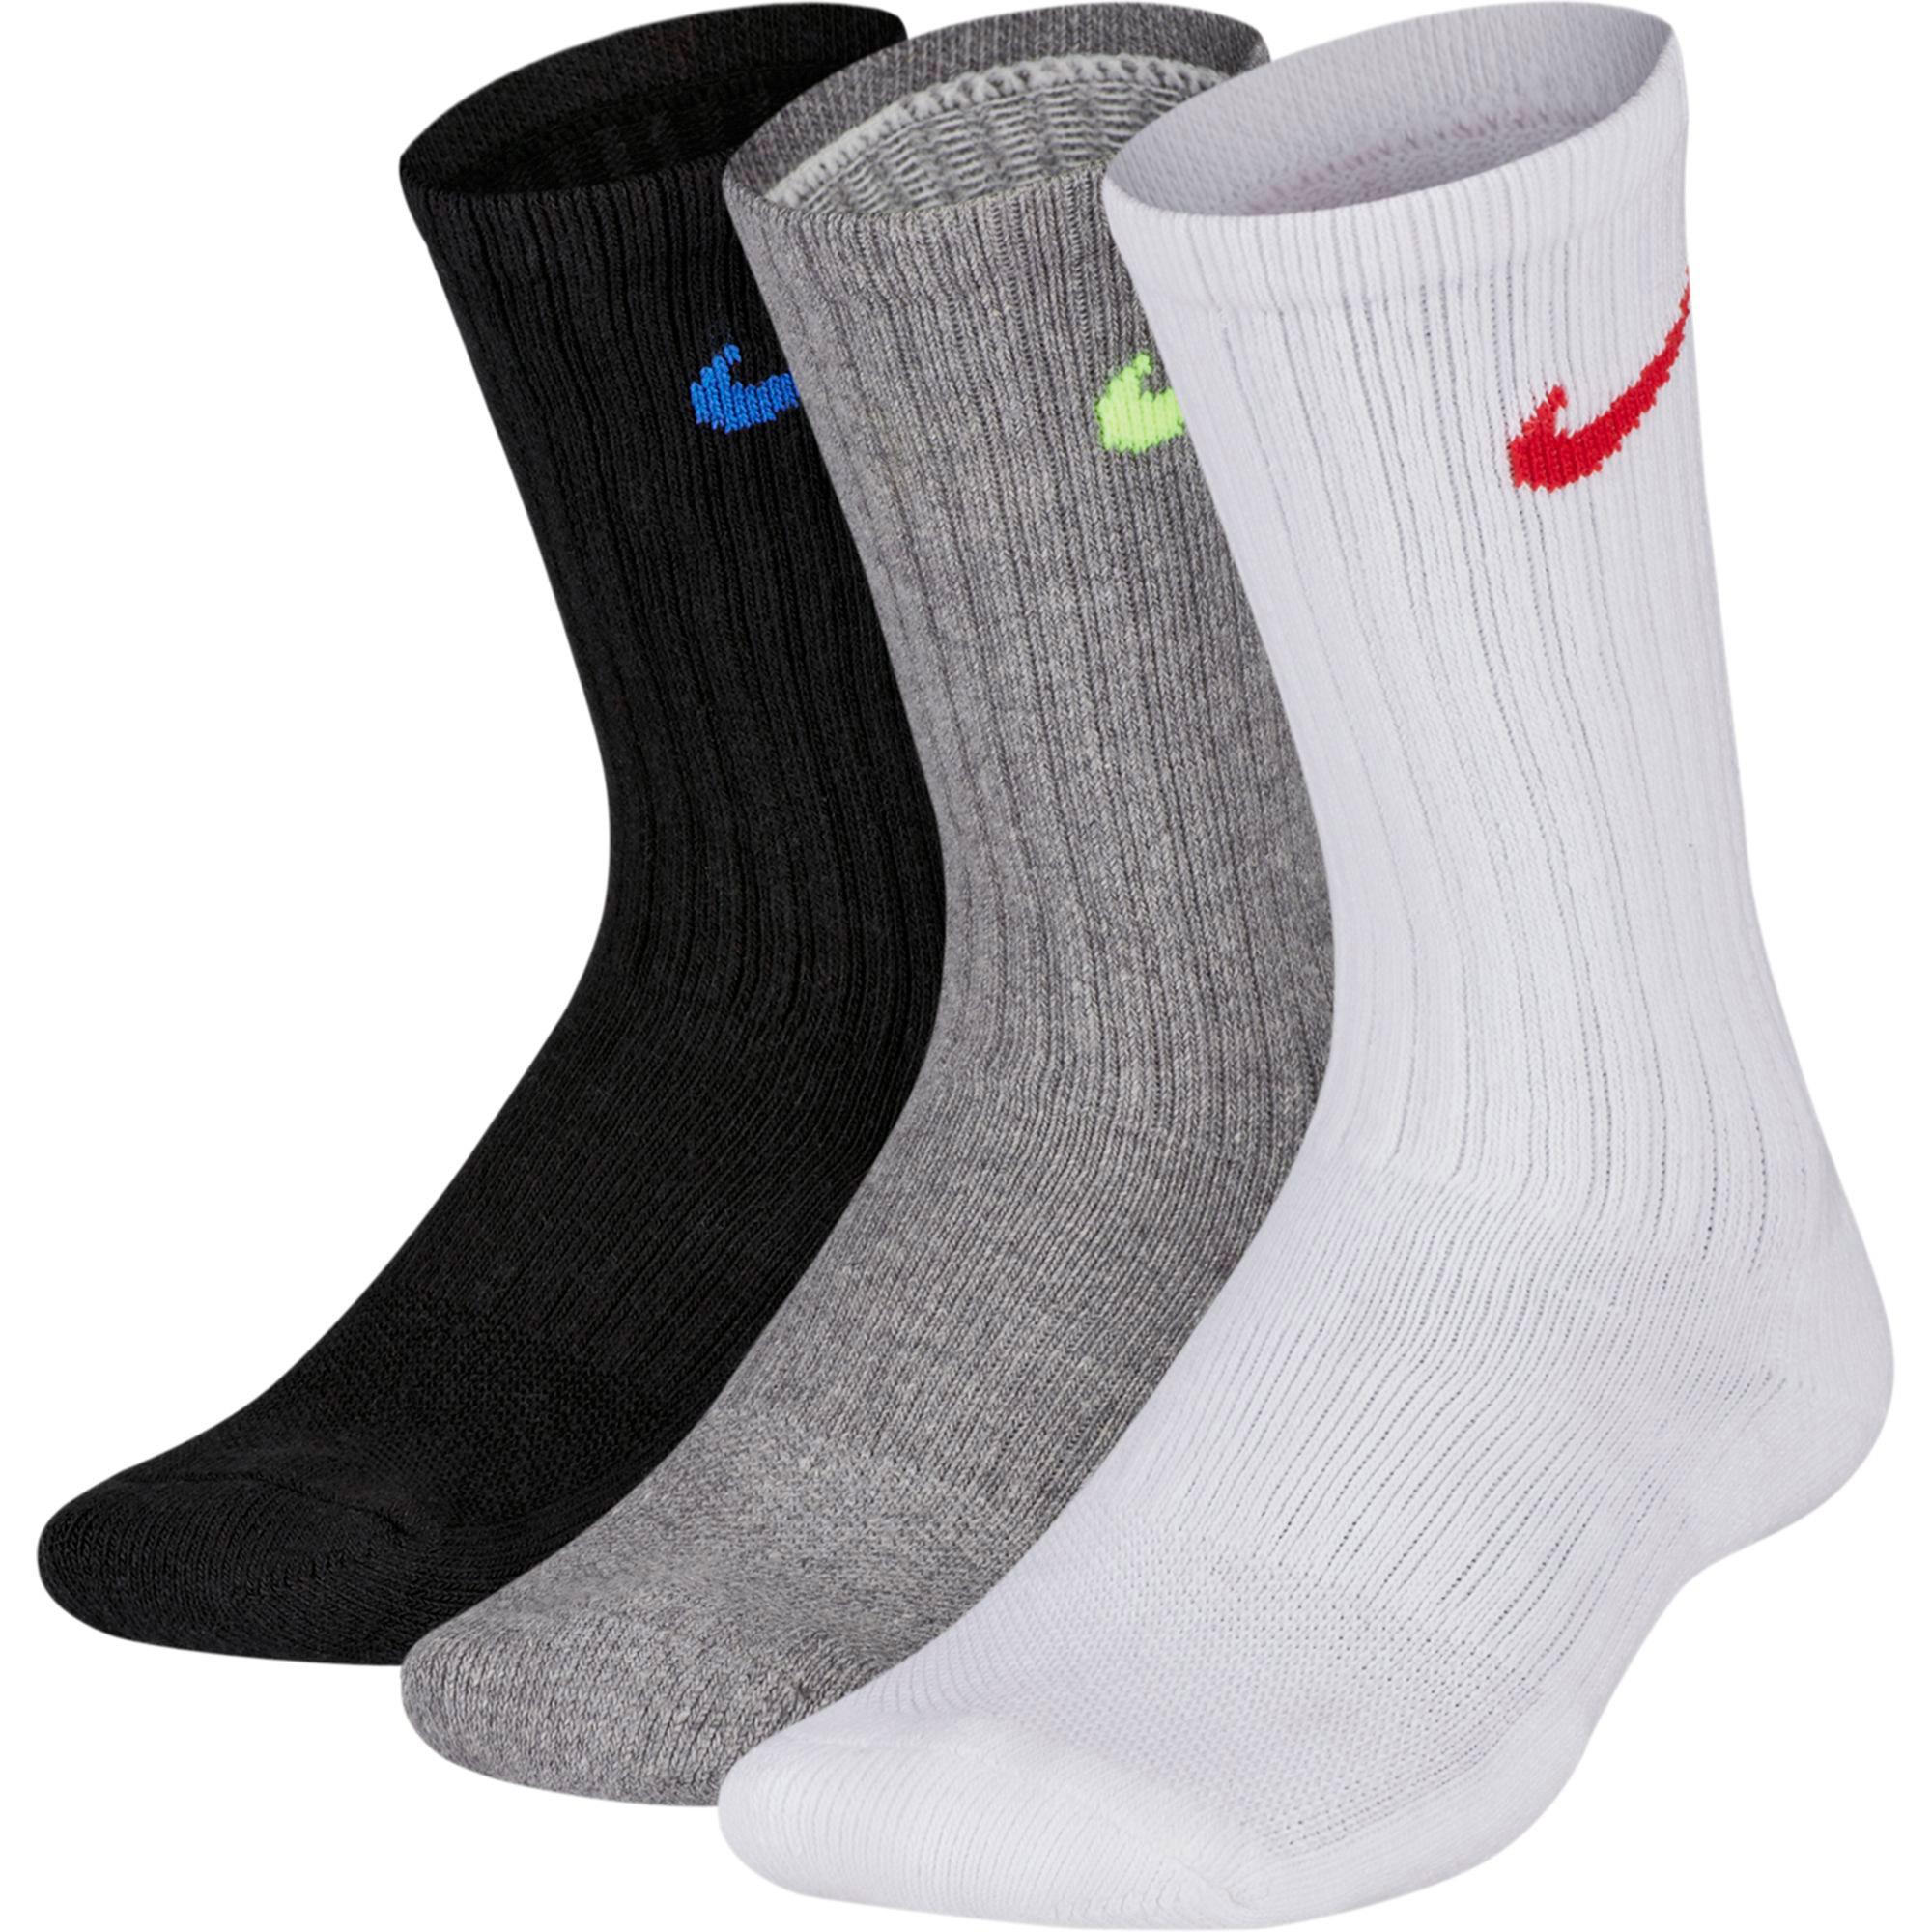 colour nike socks